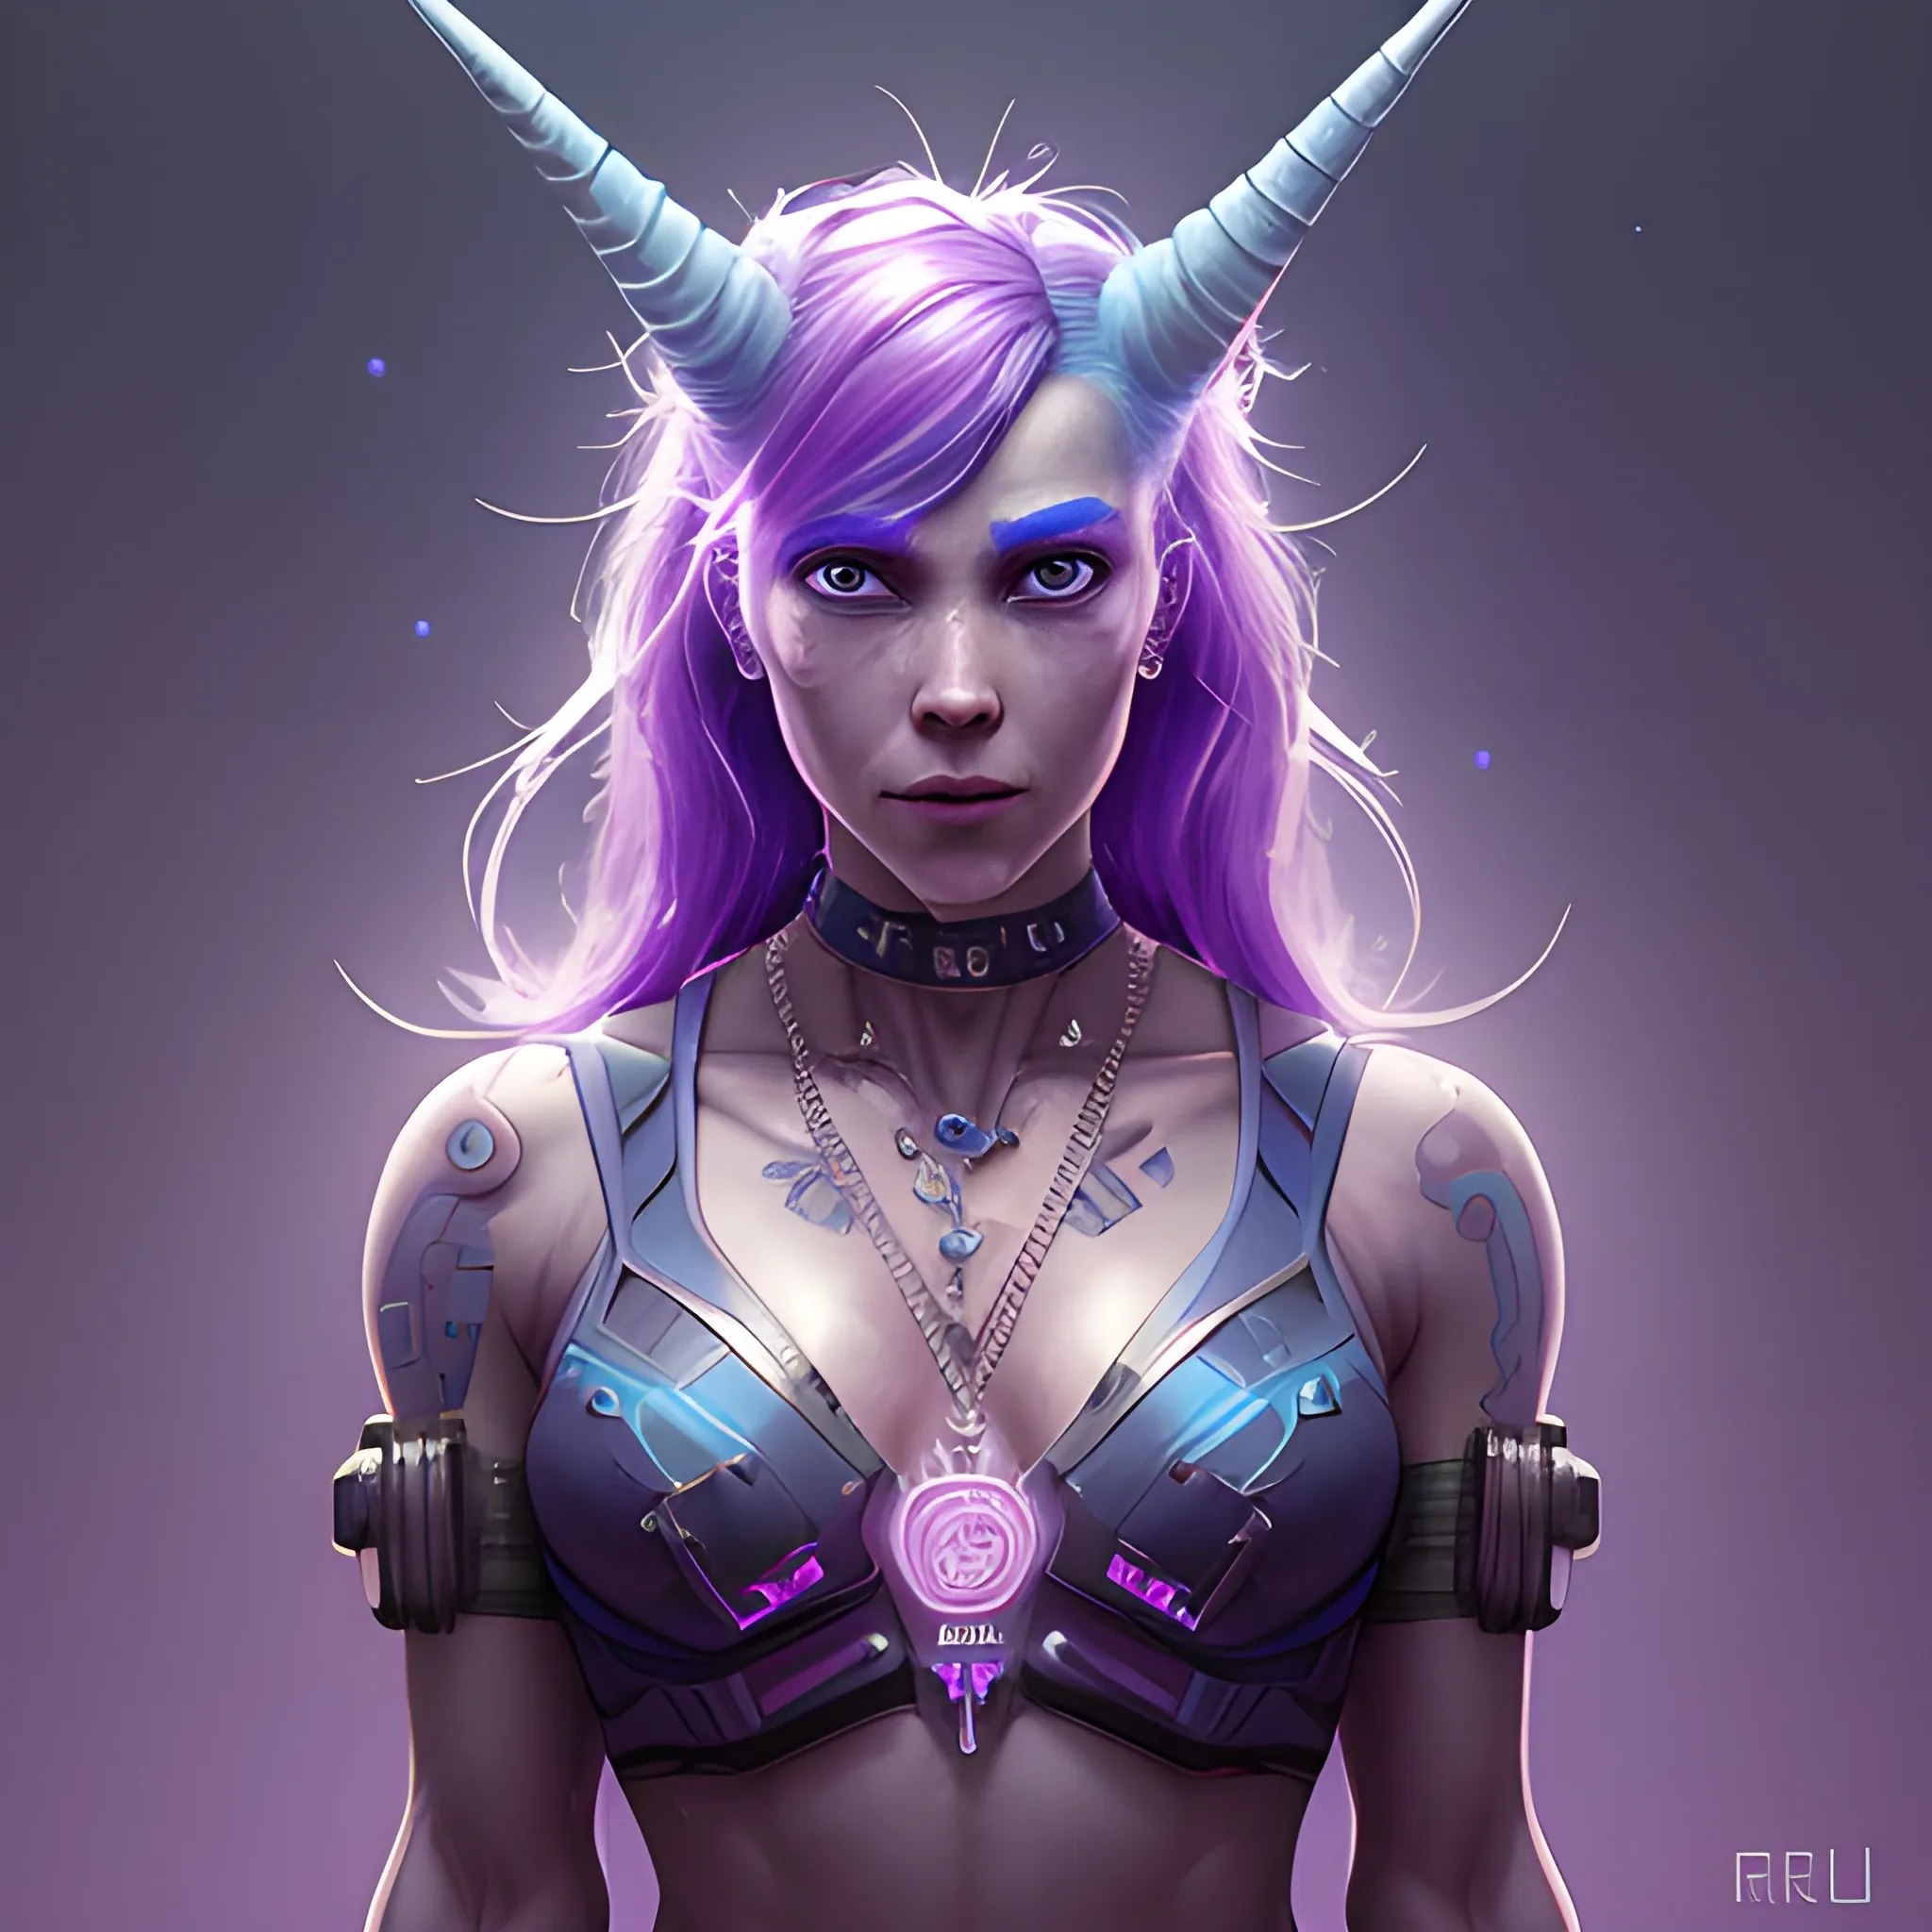 a beautiful portrait of a cute muscular cyberpunk unicorn wearing bitcoin necklace by greg rutkowski, purple blue color scheme, high key lighting, digital art, highly detailed, fine detail, intricate, ornate, complex, Cartoon